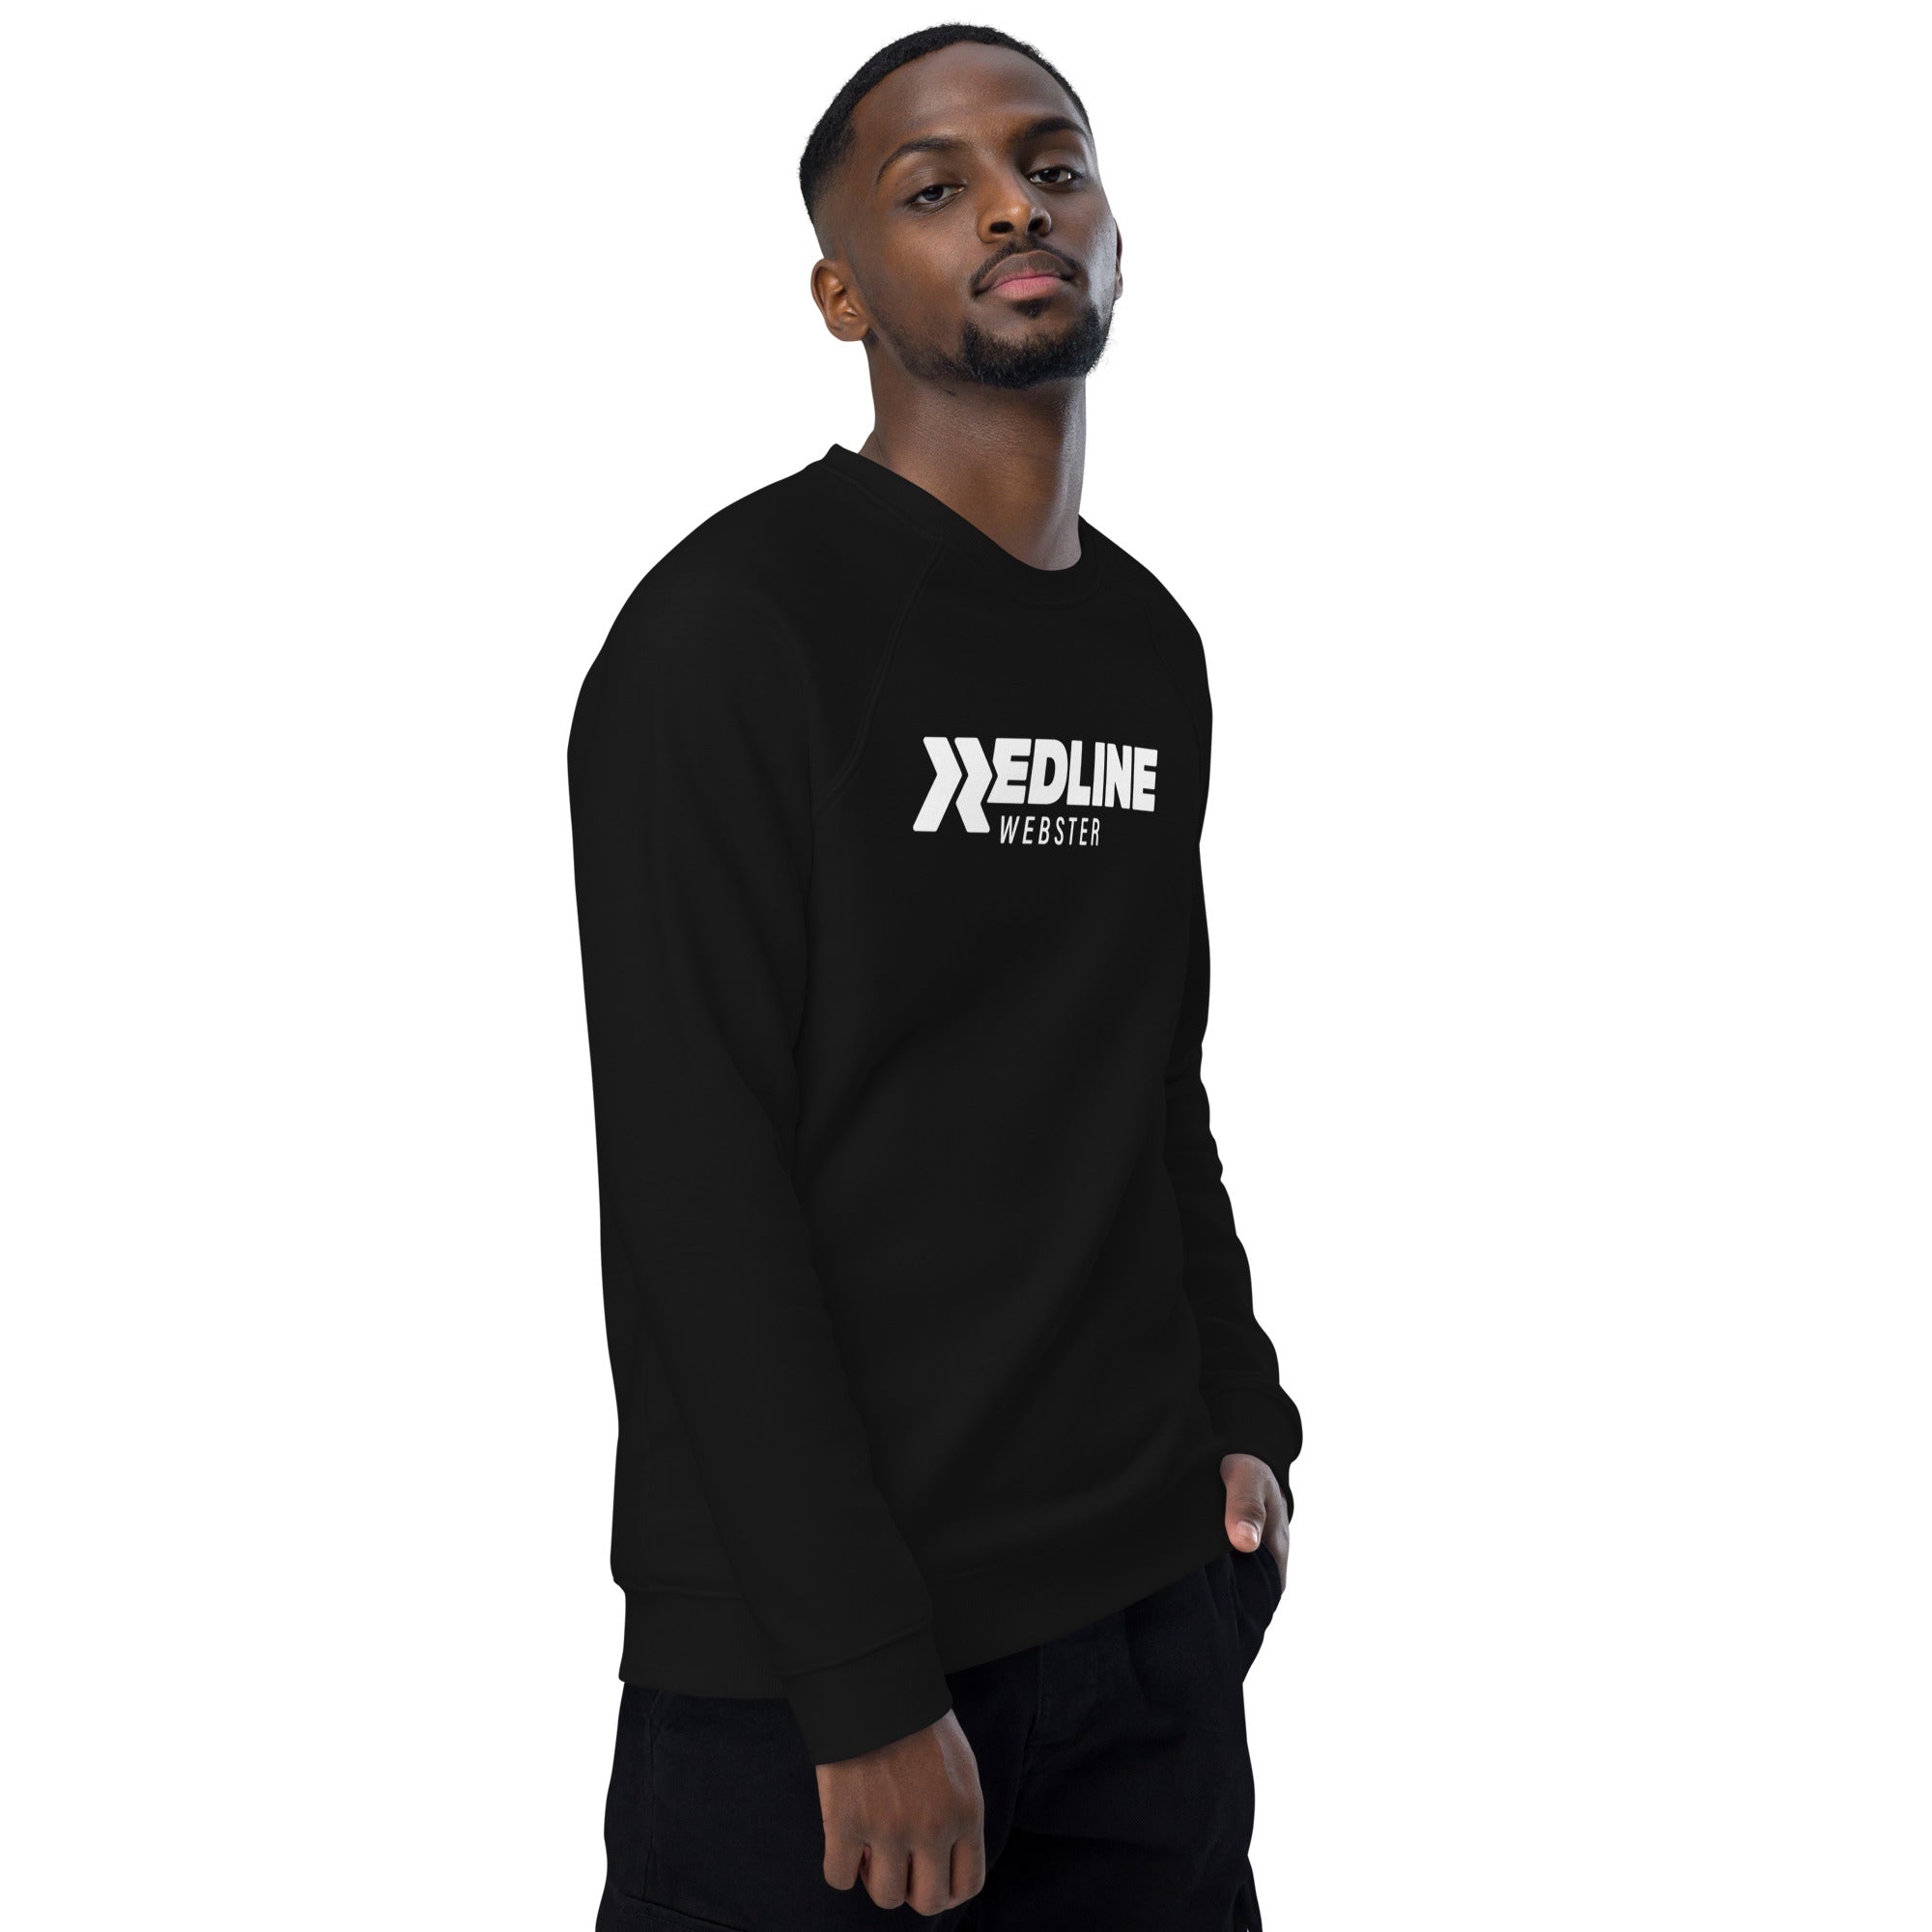 Webster Logo W - Black Unisex organic raglan sweatshirt